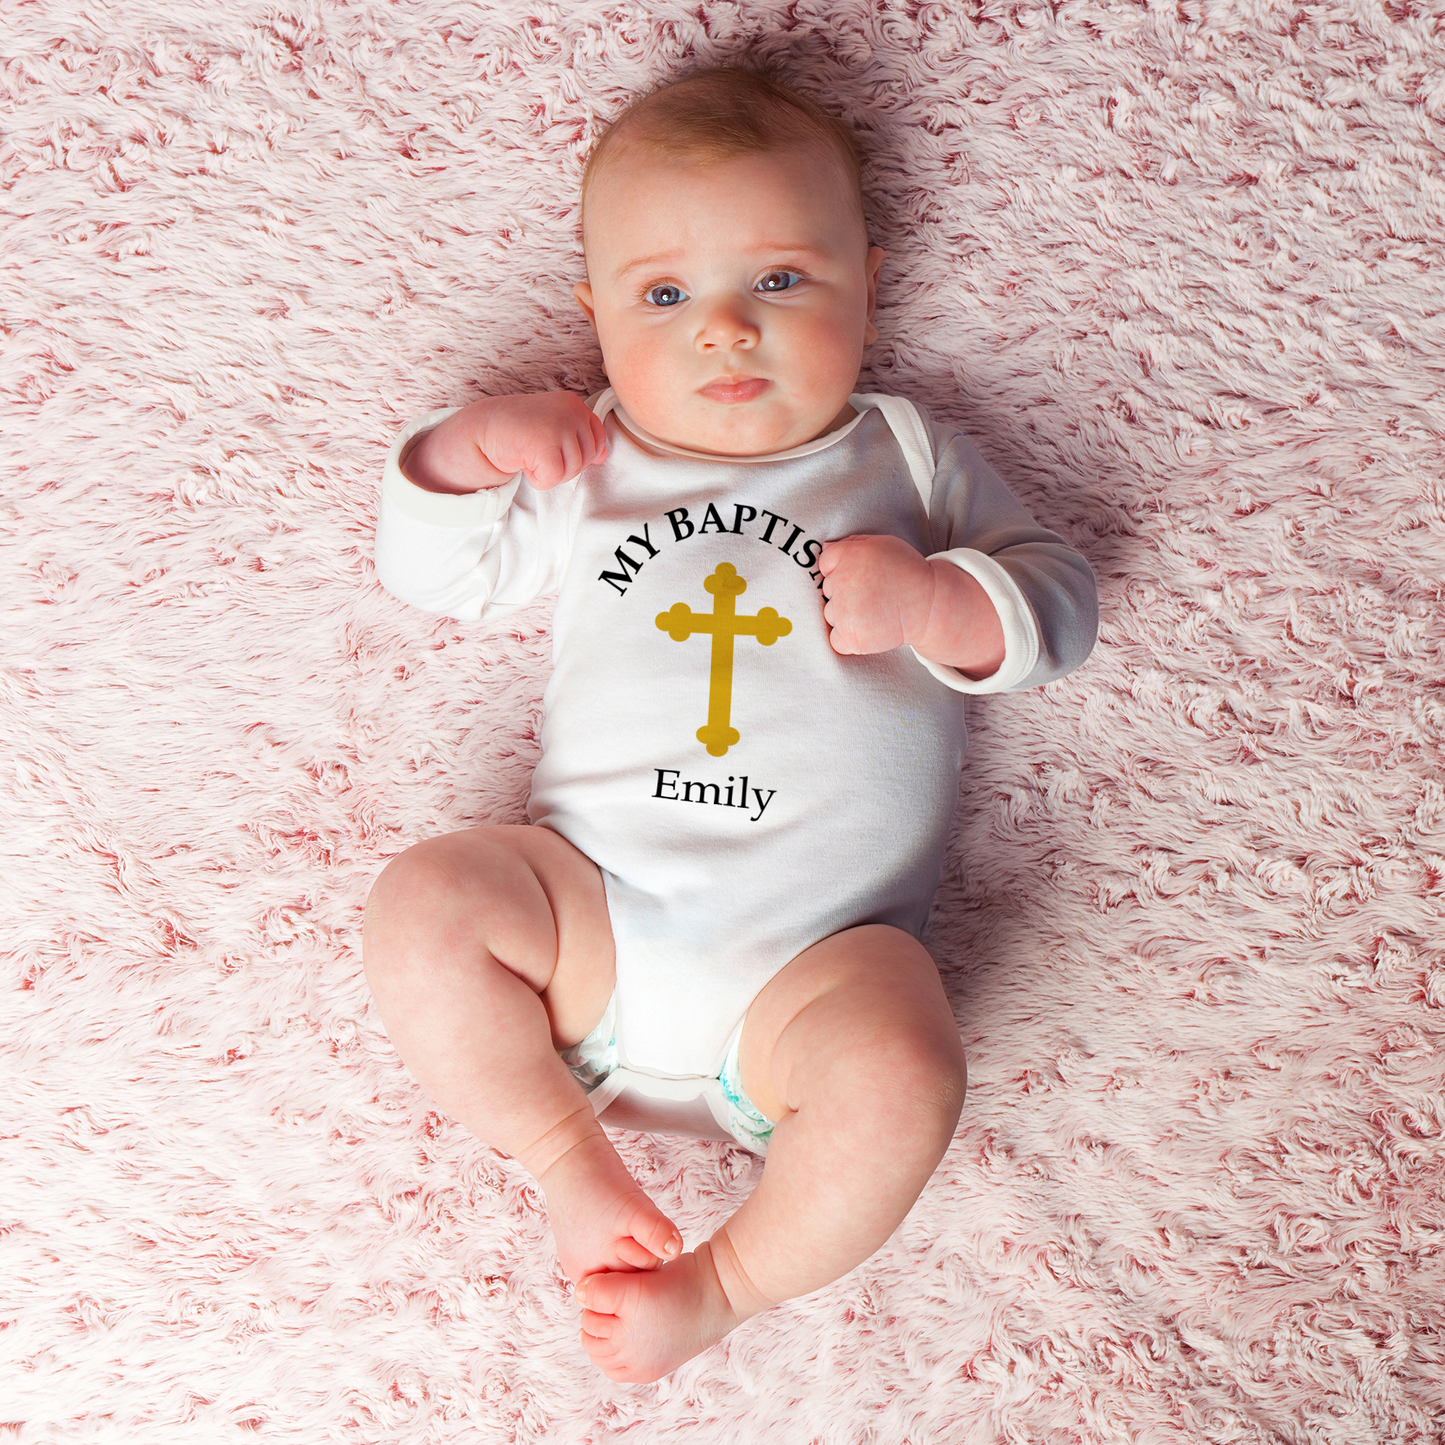 Endanzoo Newborn Baby Organic Clothing Gift Set - Baptism / Christening Day (White)